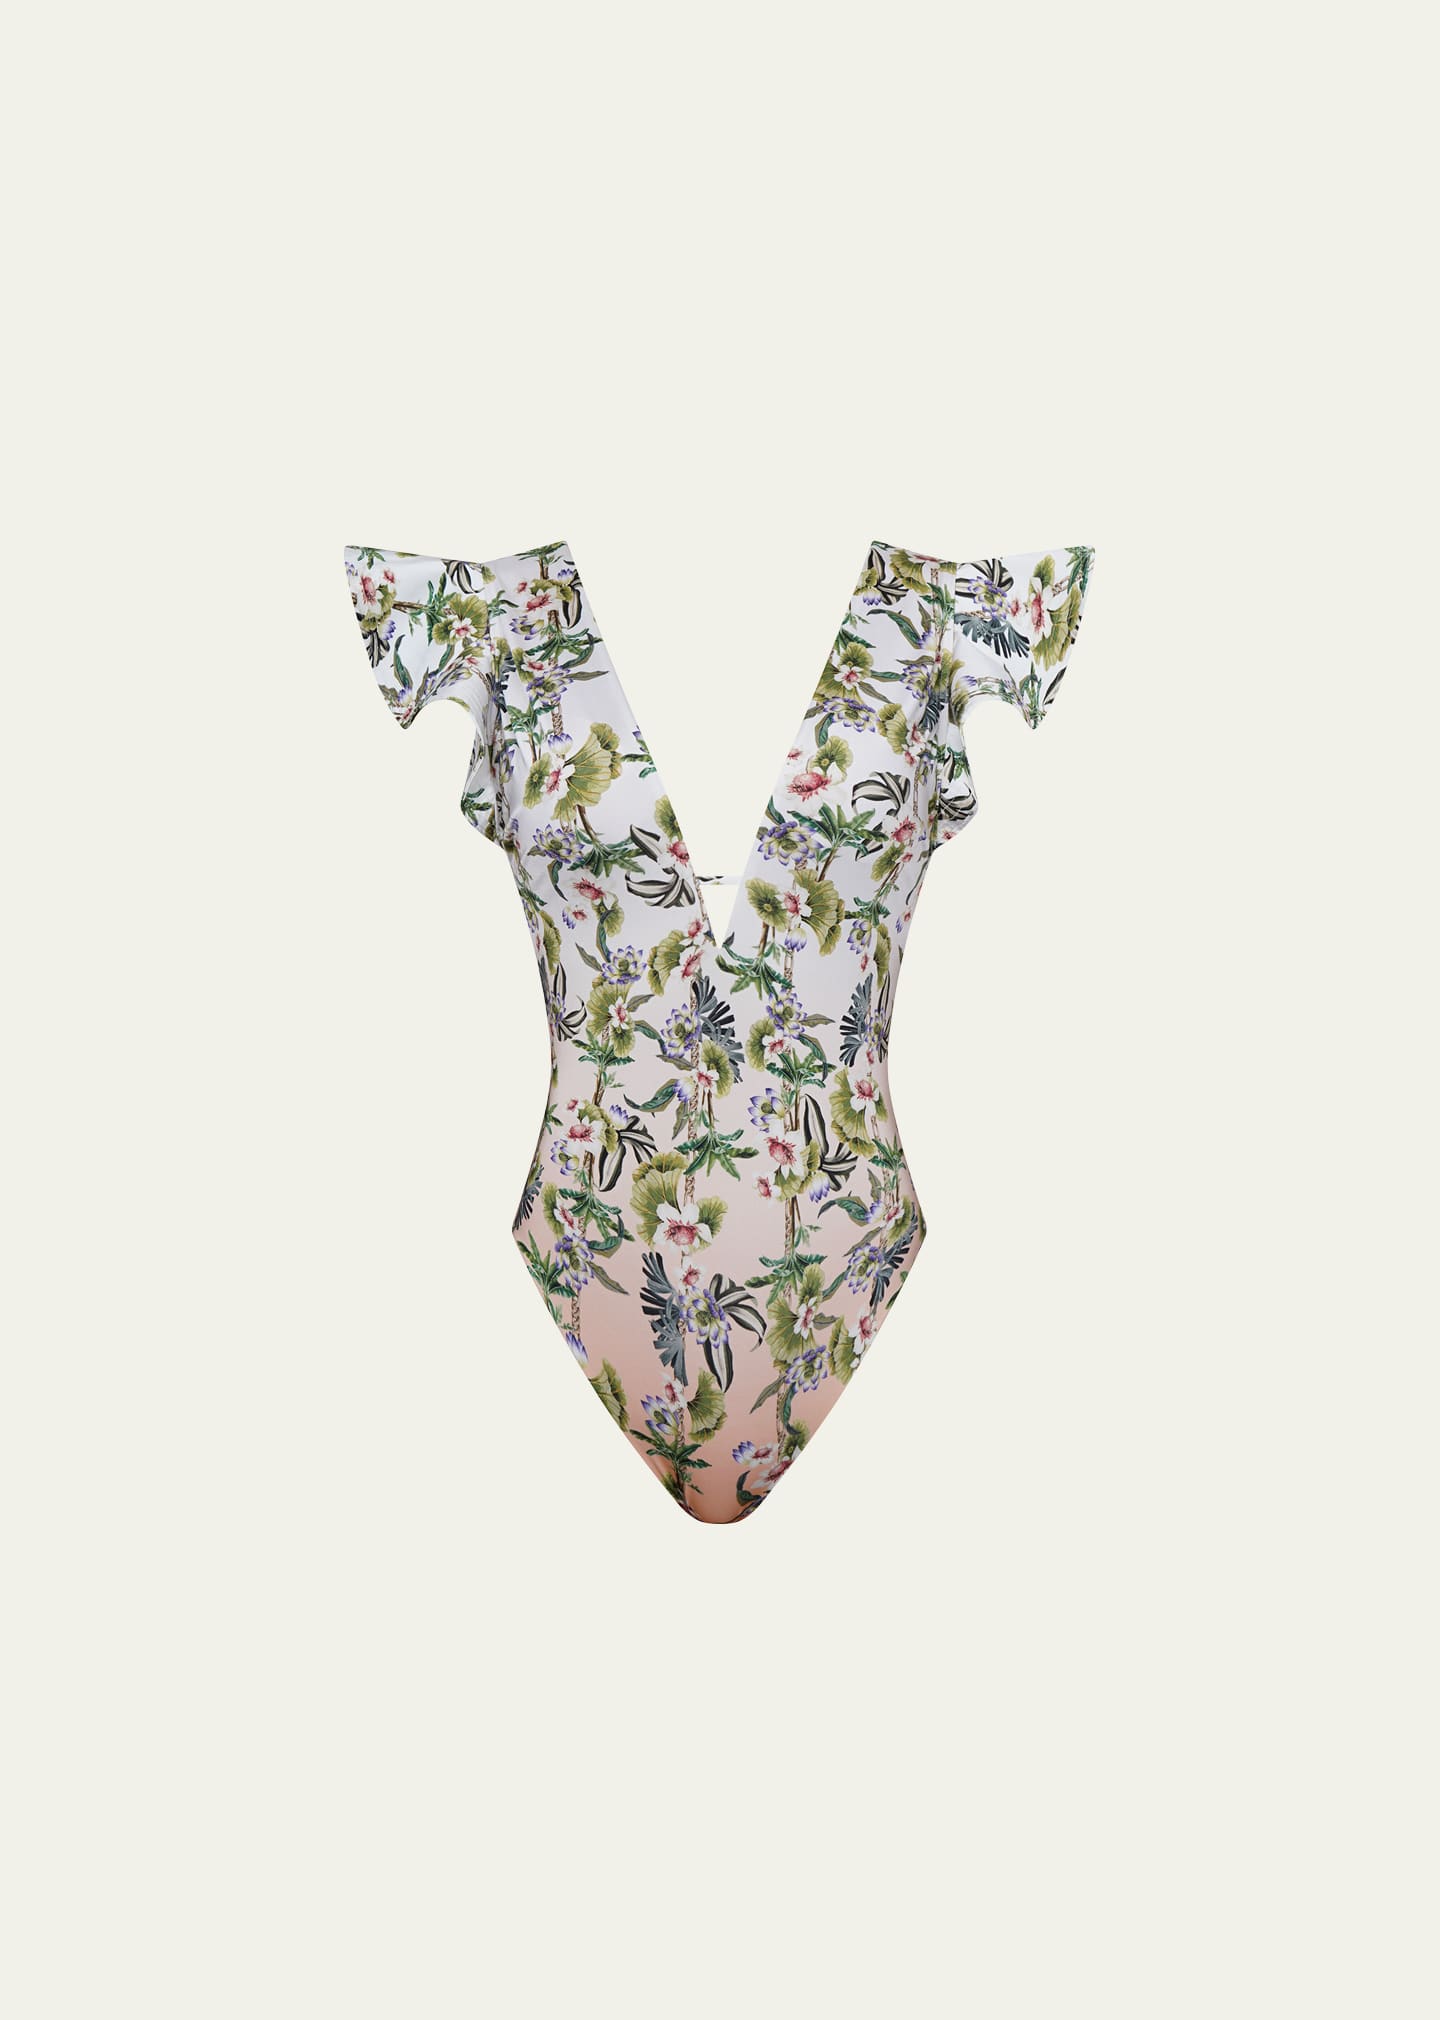 Daffodil-Print Mackenzie One-Piece Swimsuit (A-C Cup)